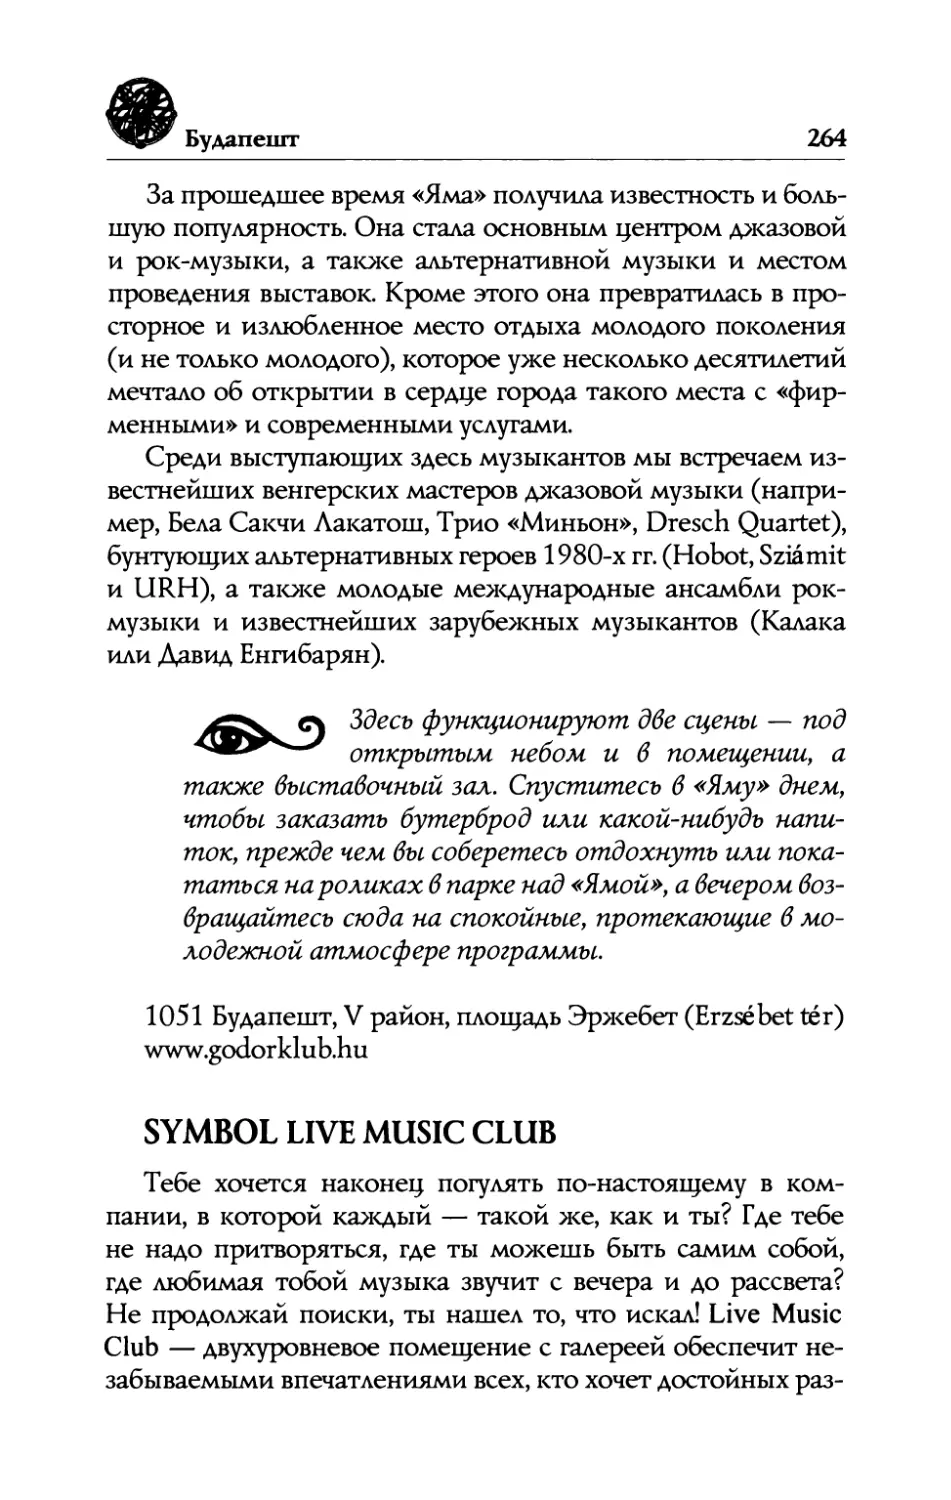 Symbol  Live  Music  Club